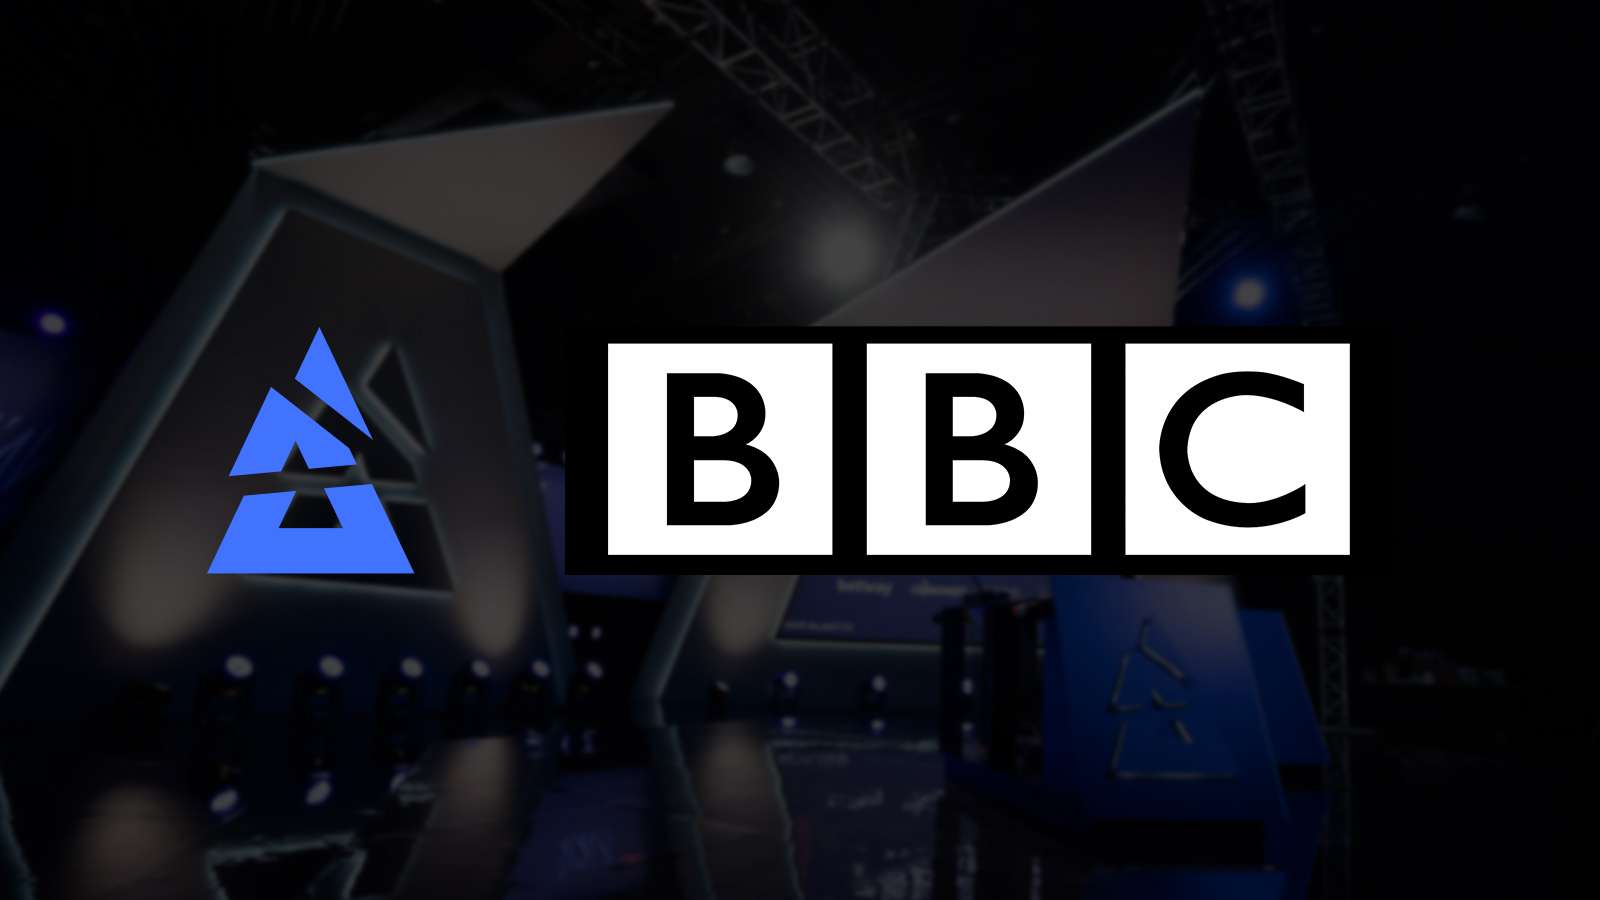 BLAST Premier to be broadcast on BBC iPlayer